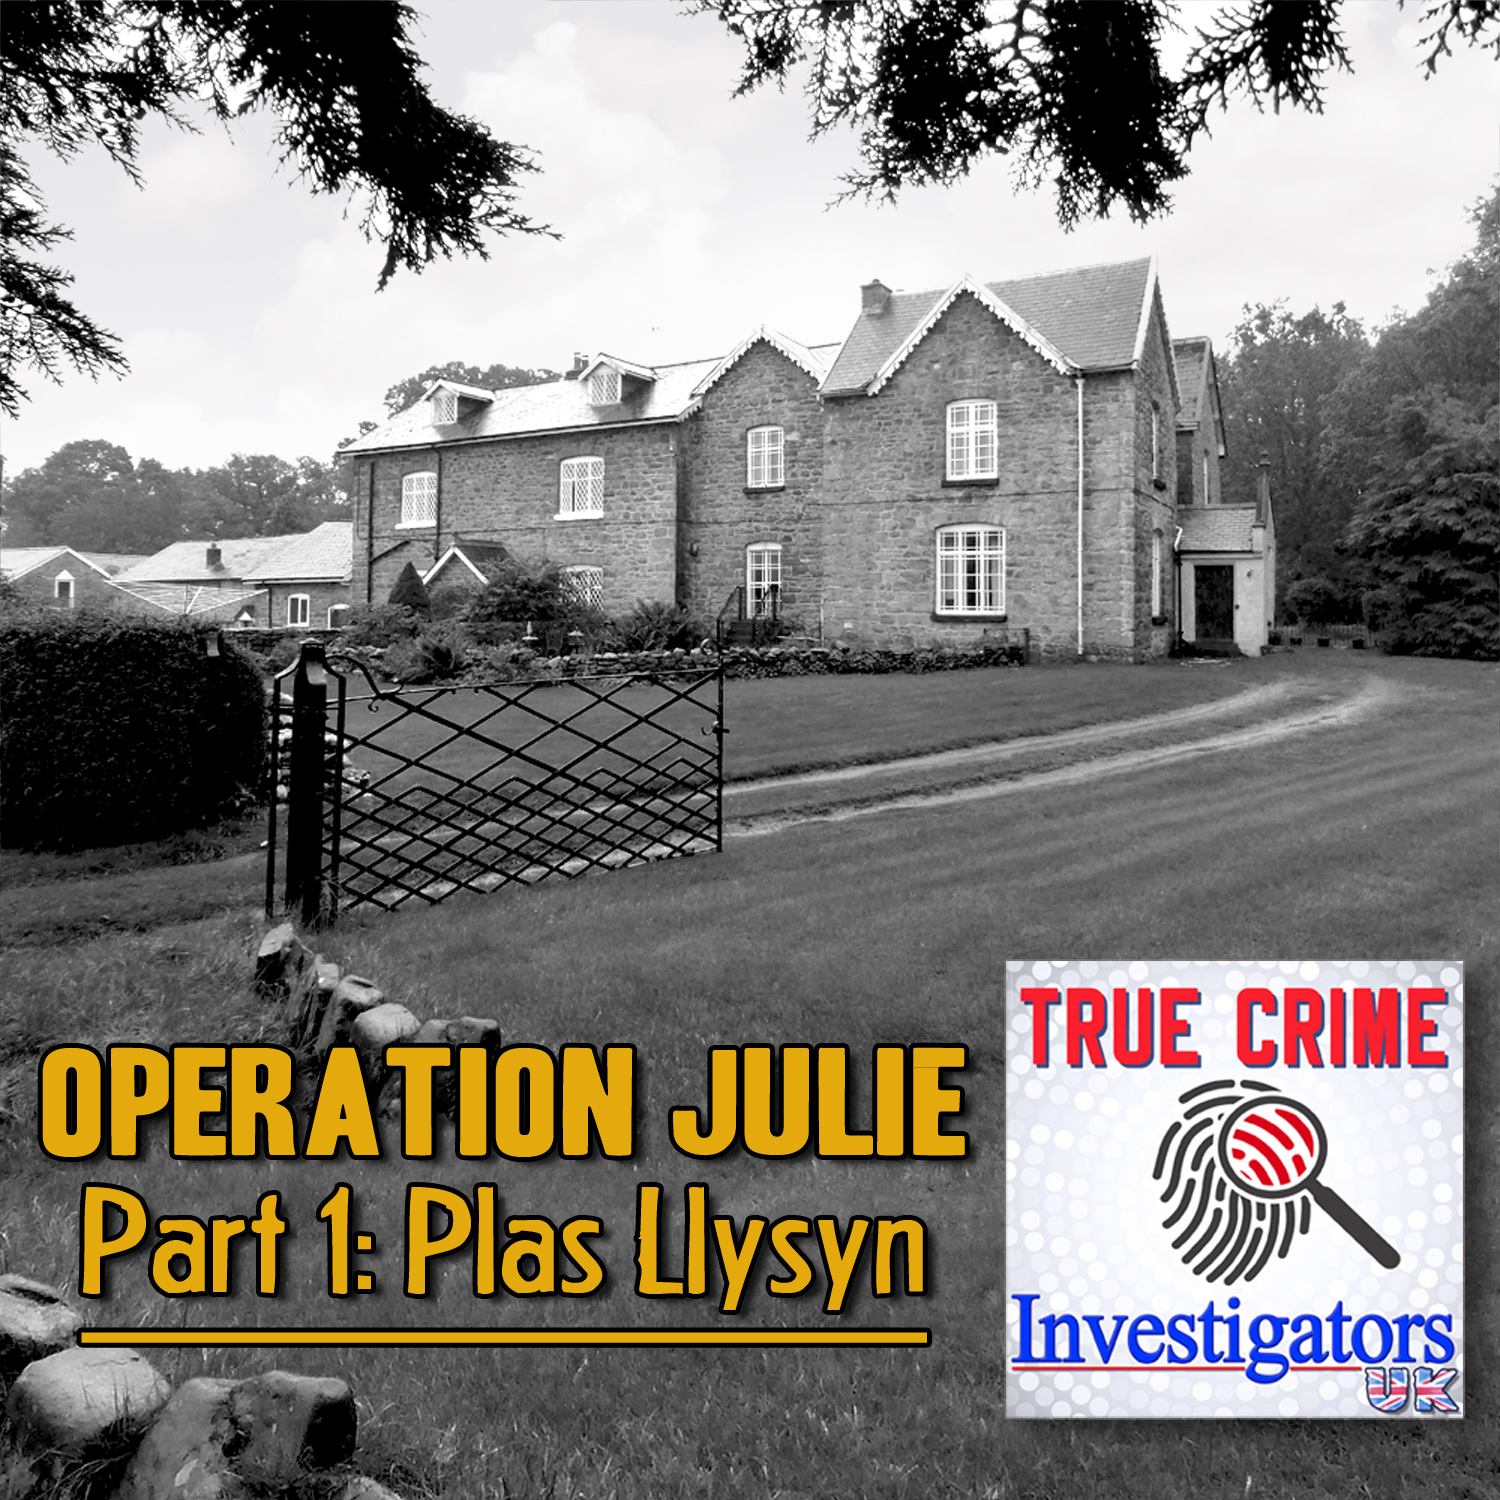 Artwork for podcast True Crime Investigators UK